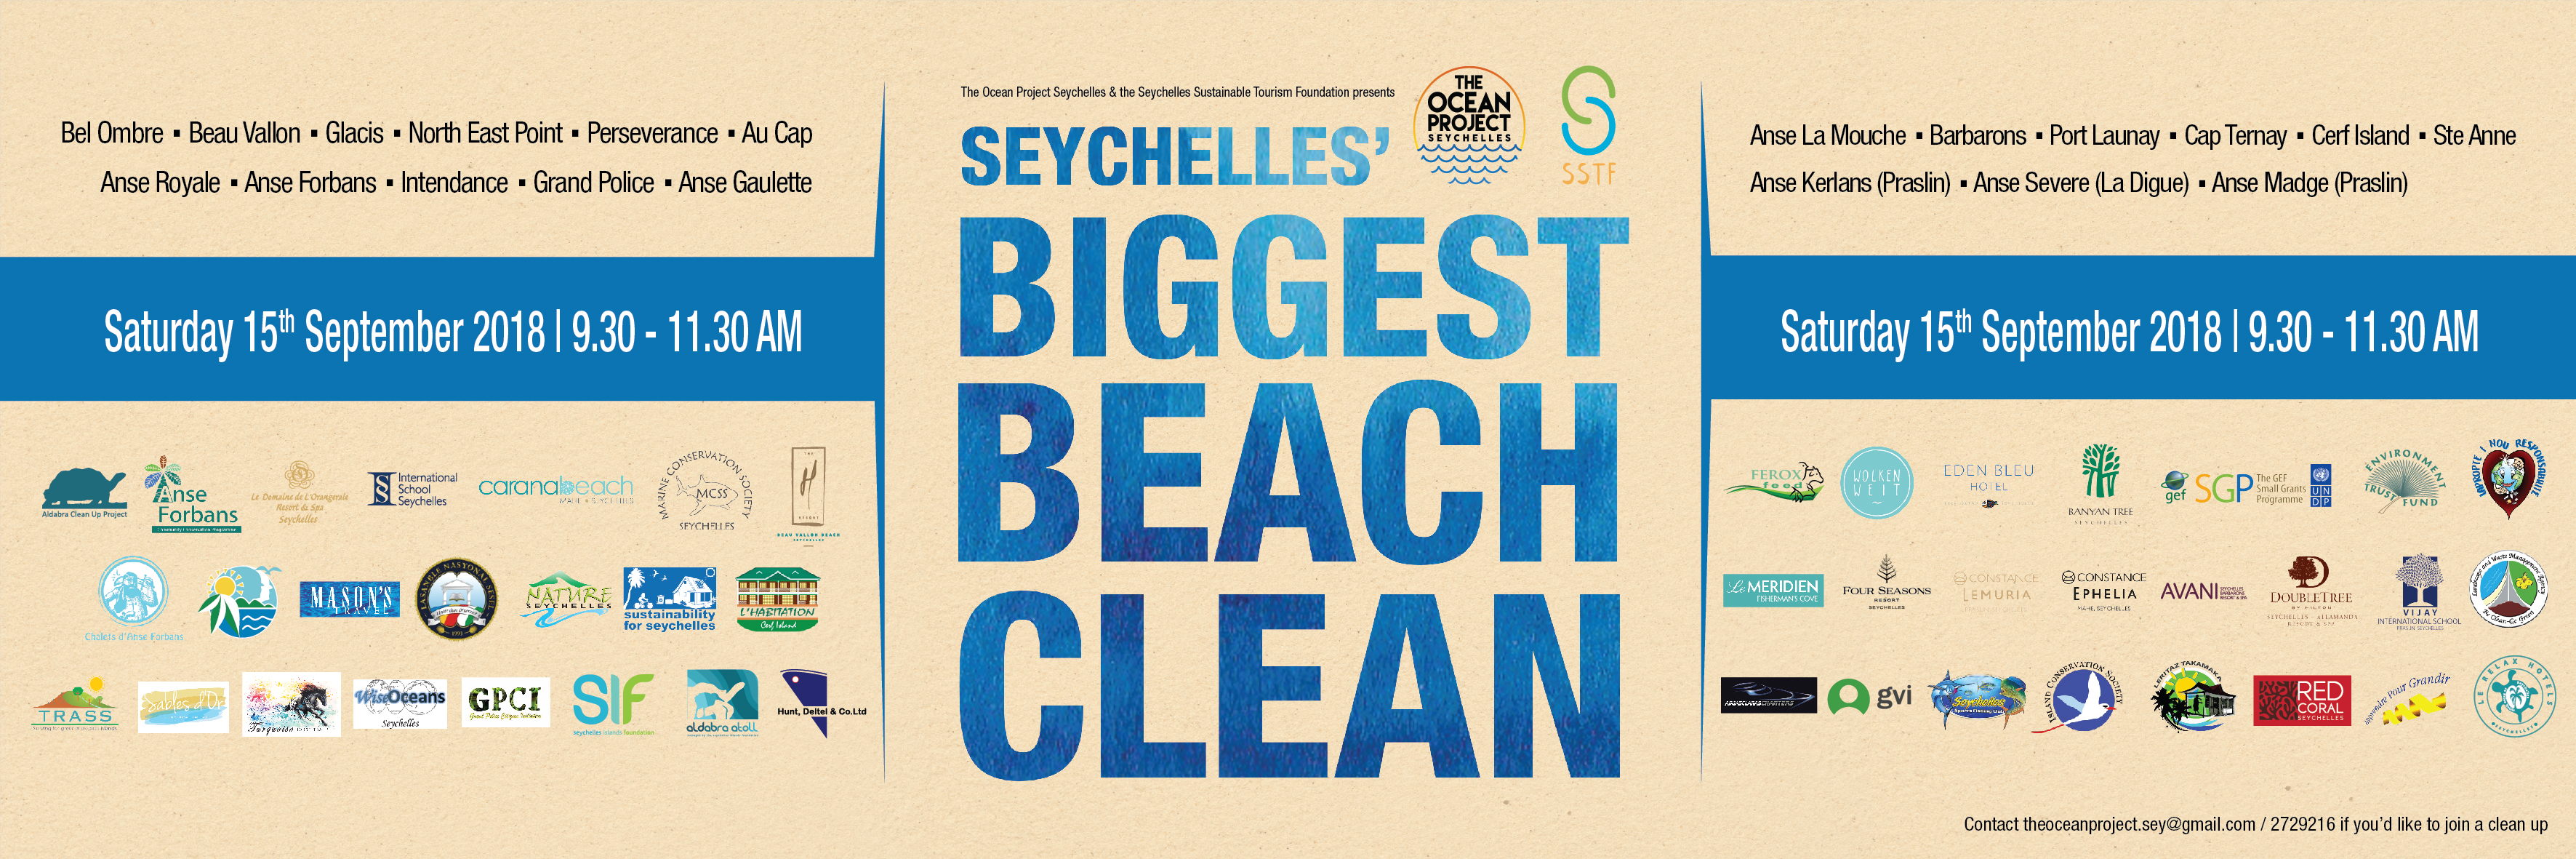 seychelles biggest beach clean up